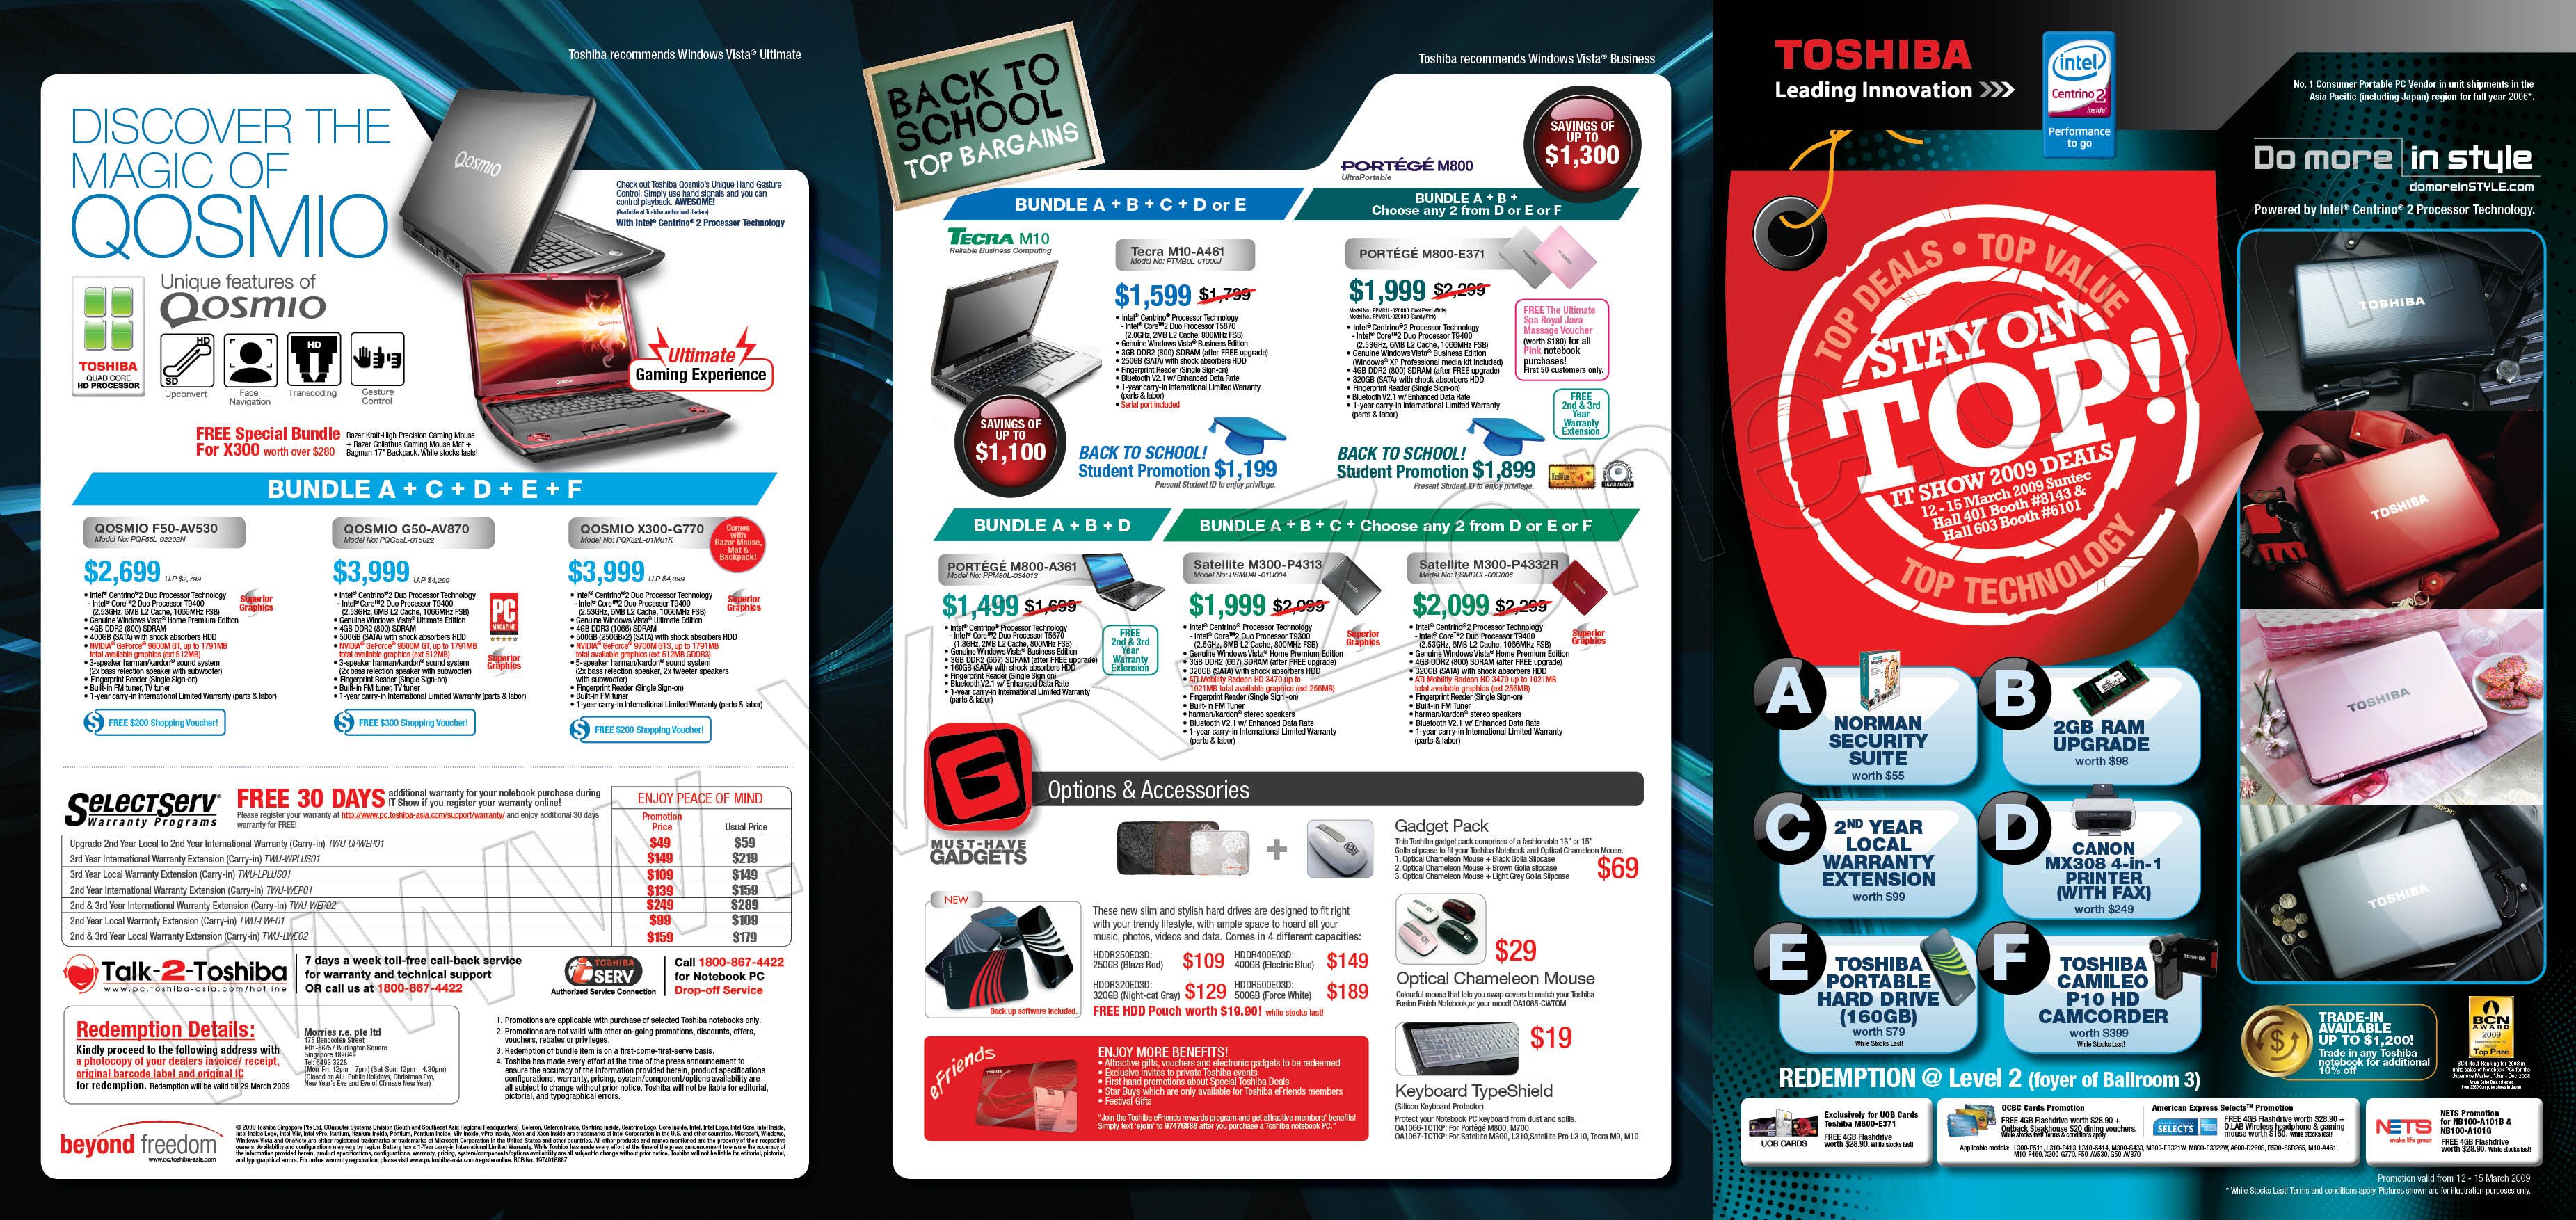 IT Show 2009 price list image brochure of Toshiba 1 Notebooks Tecra Portege Satellite VR-Zone